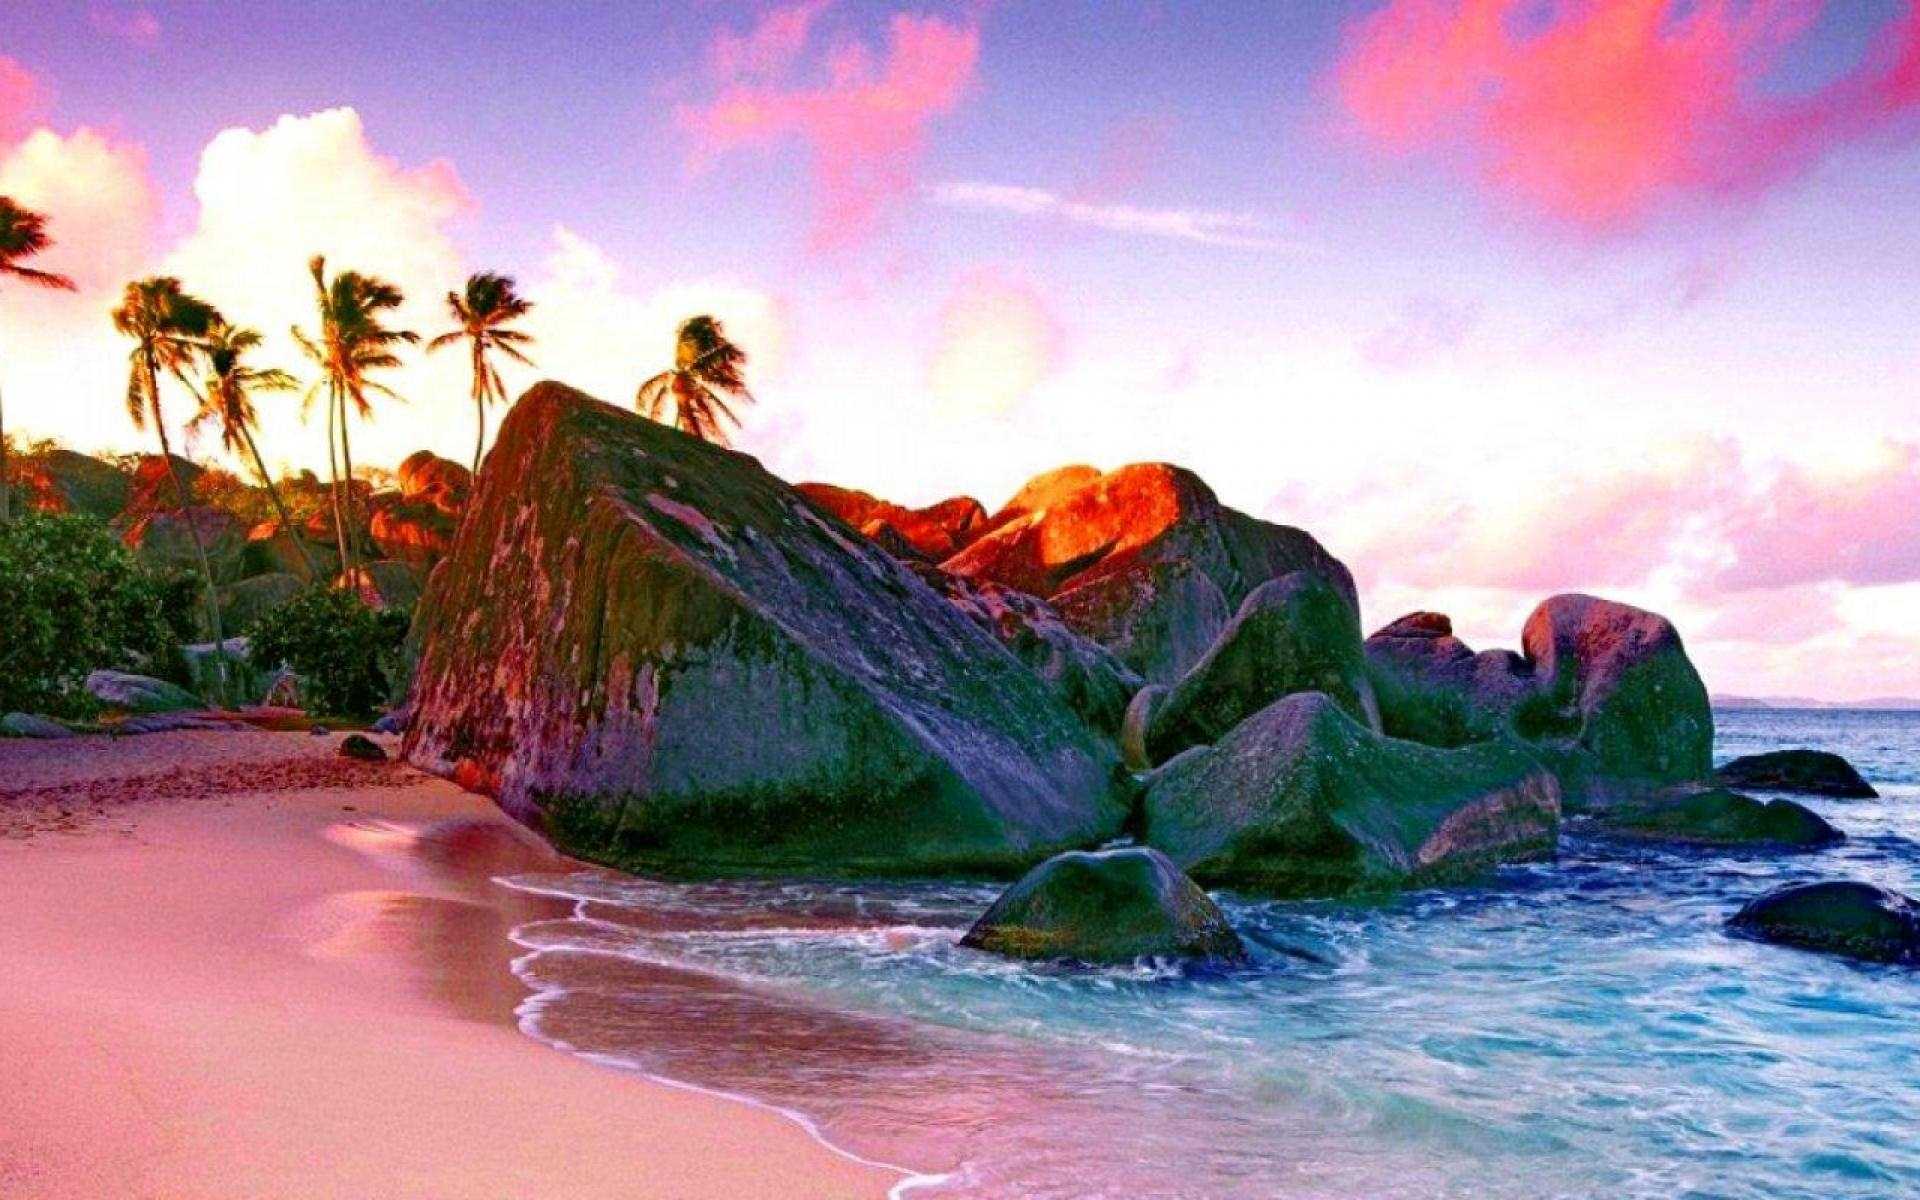 bahamas sunset wallpaper